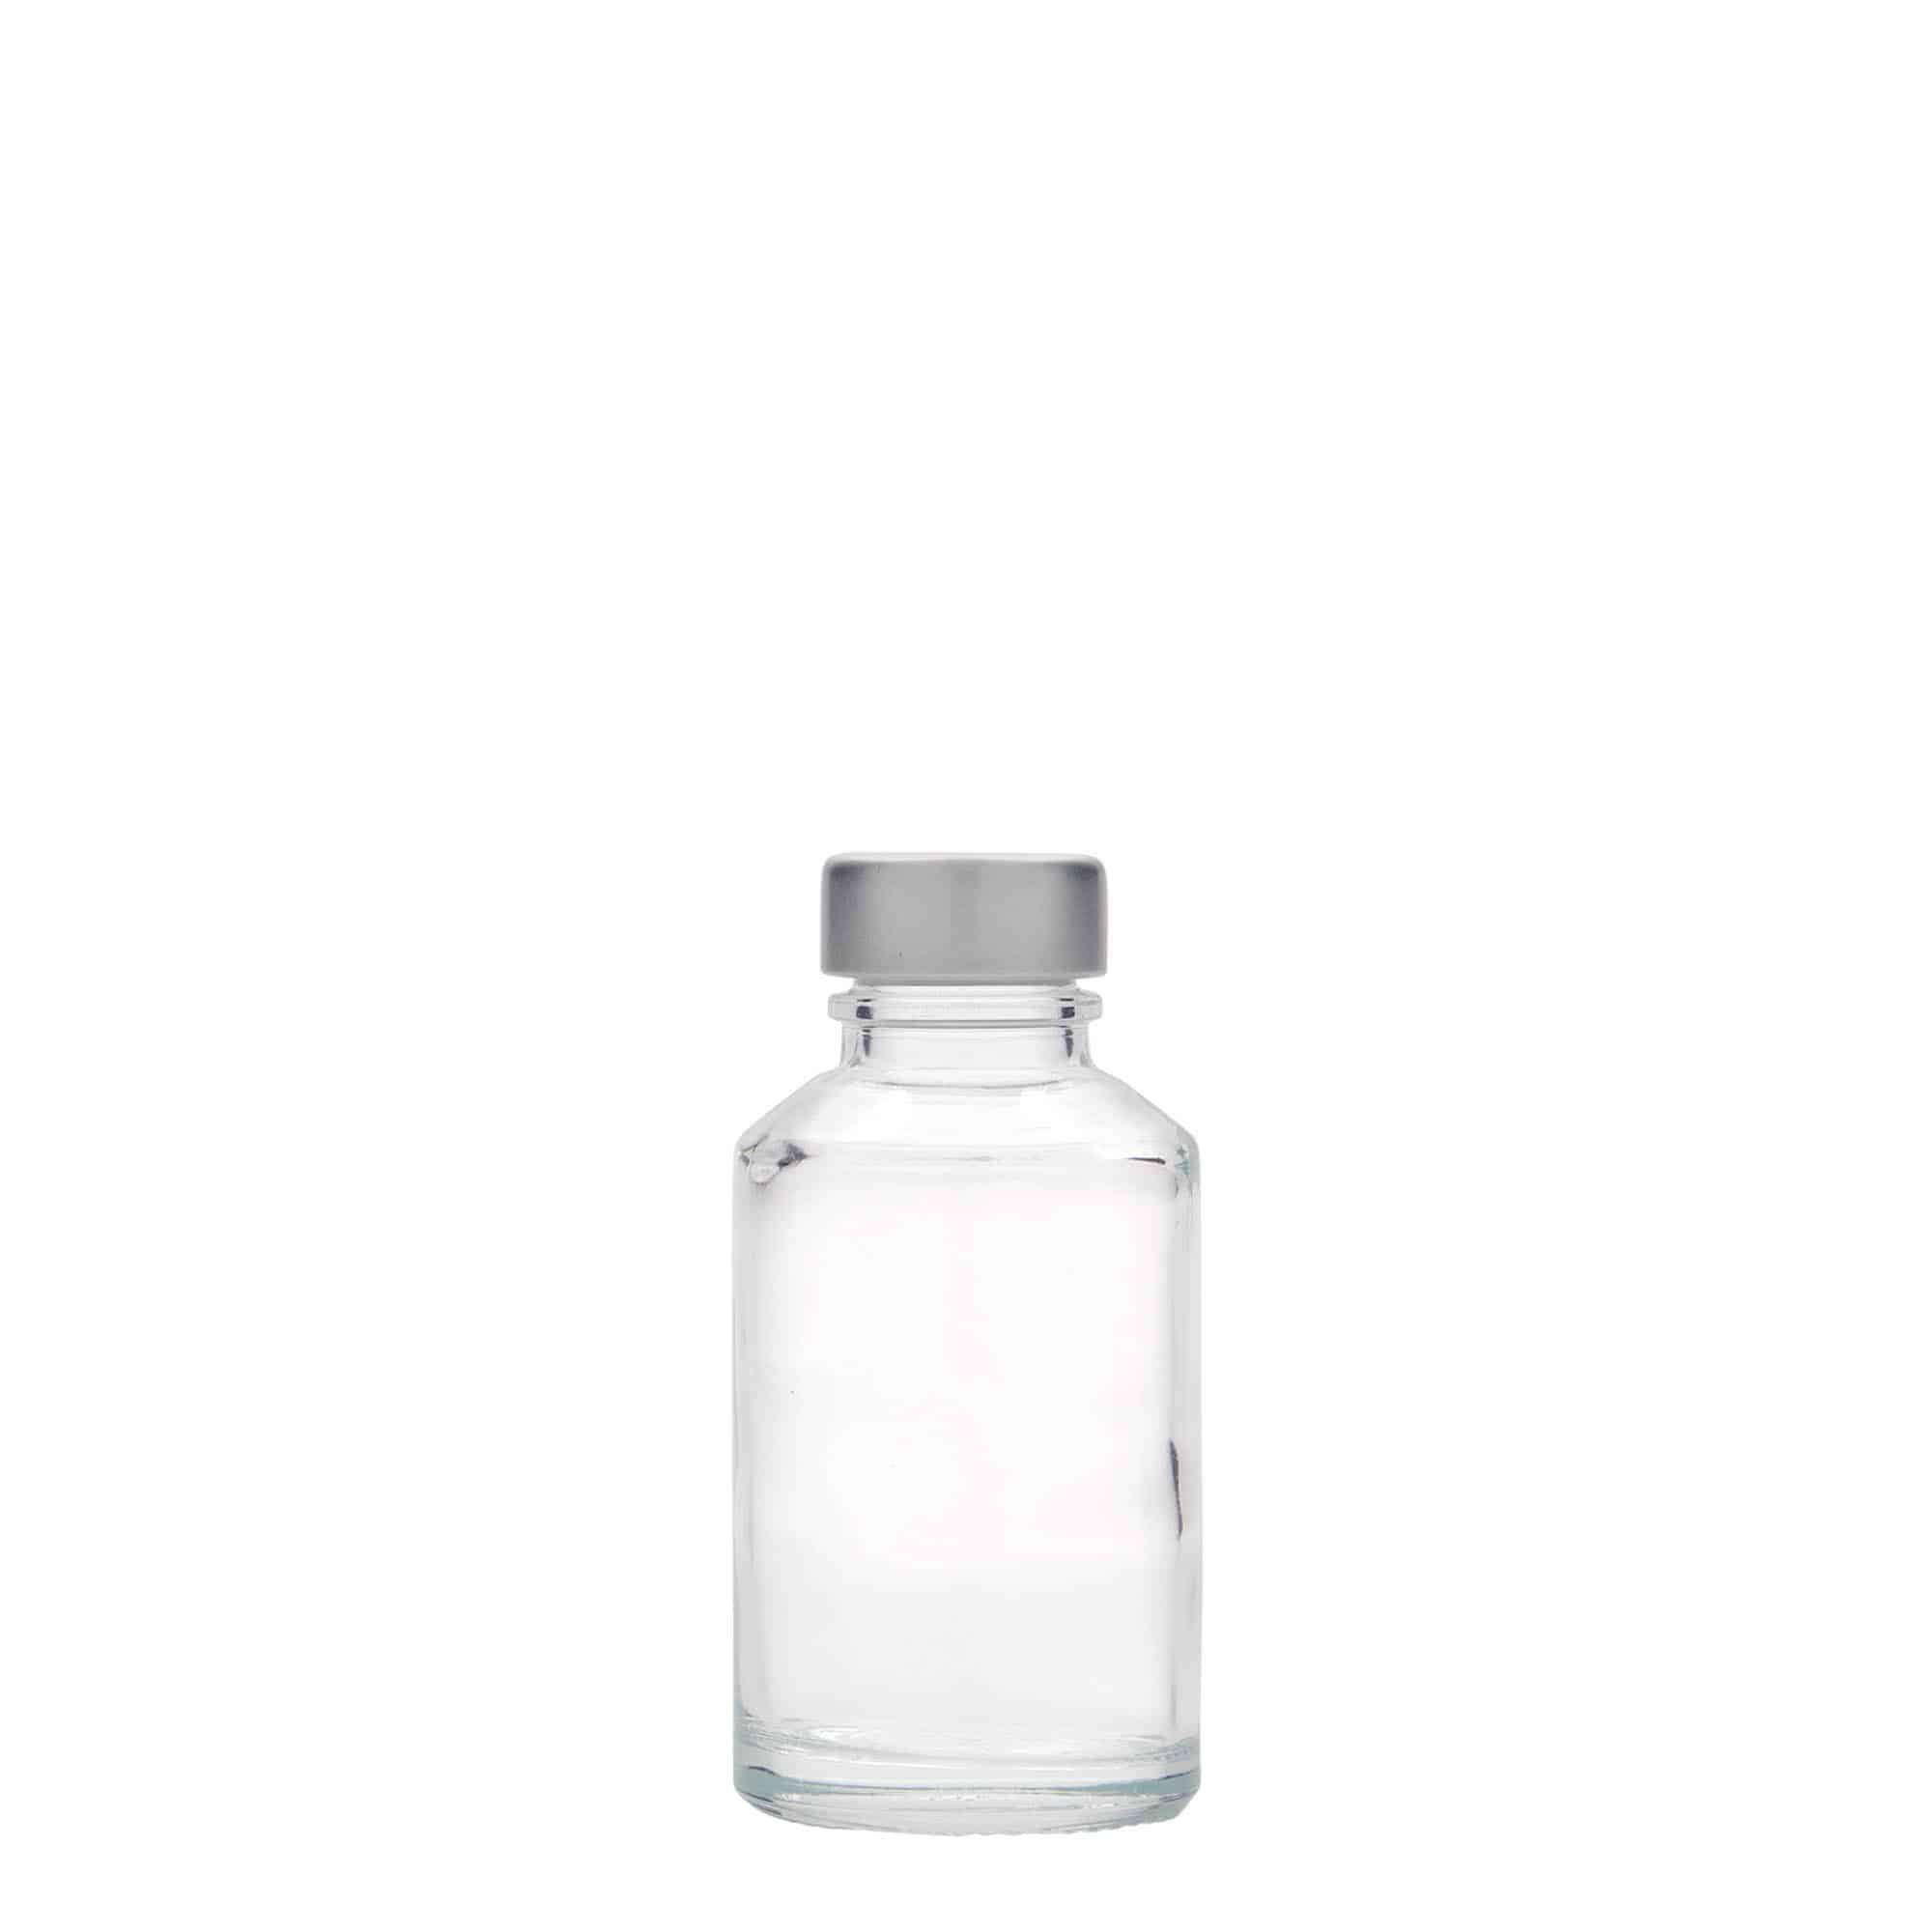 50 ml glass bottle 'Hella', closure: GPI 22